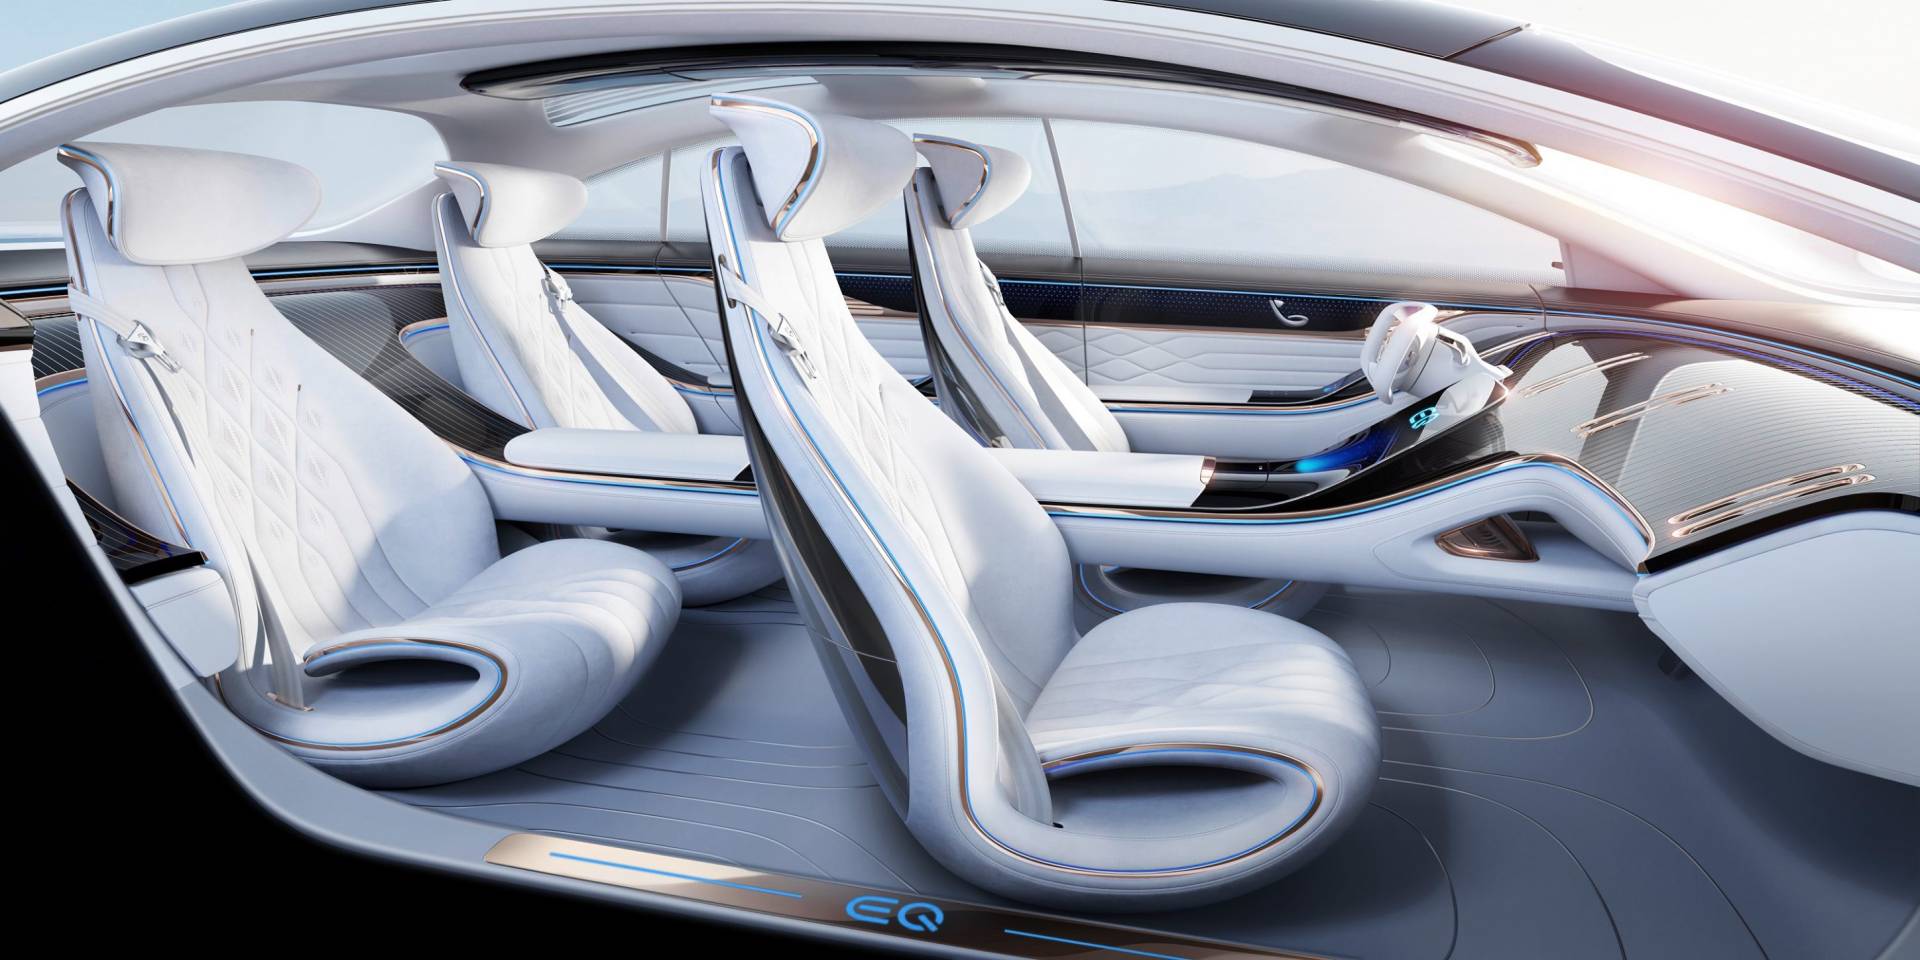 New Mercedes-Benz EQS Study Reveals Futuristic, Lounge-Like Interior